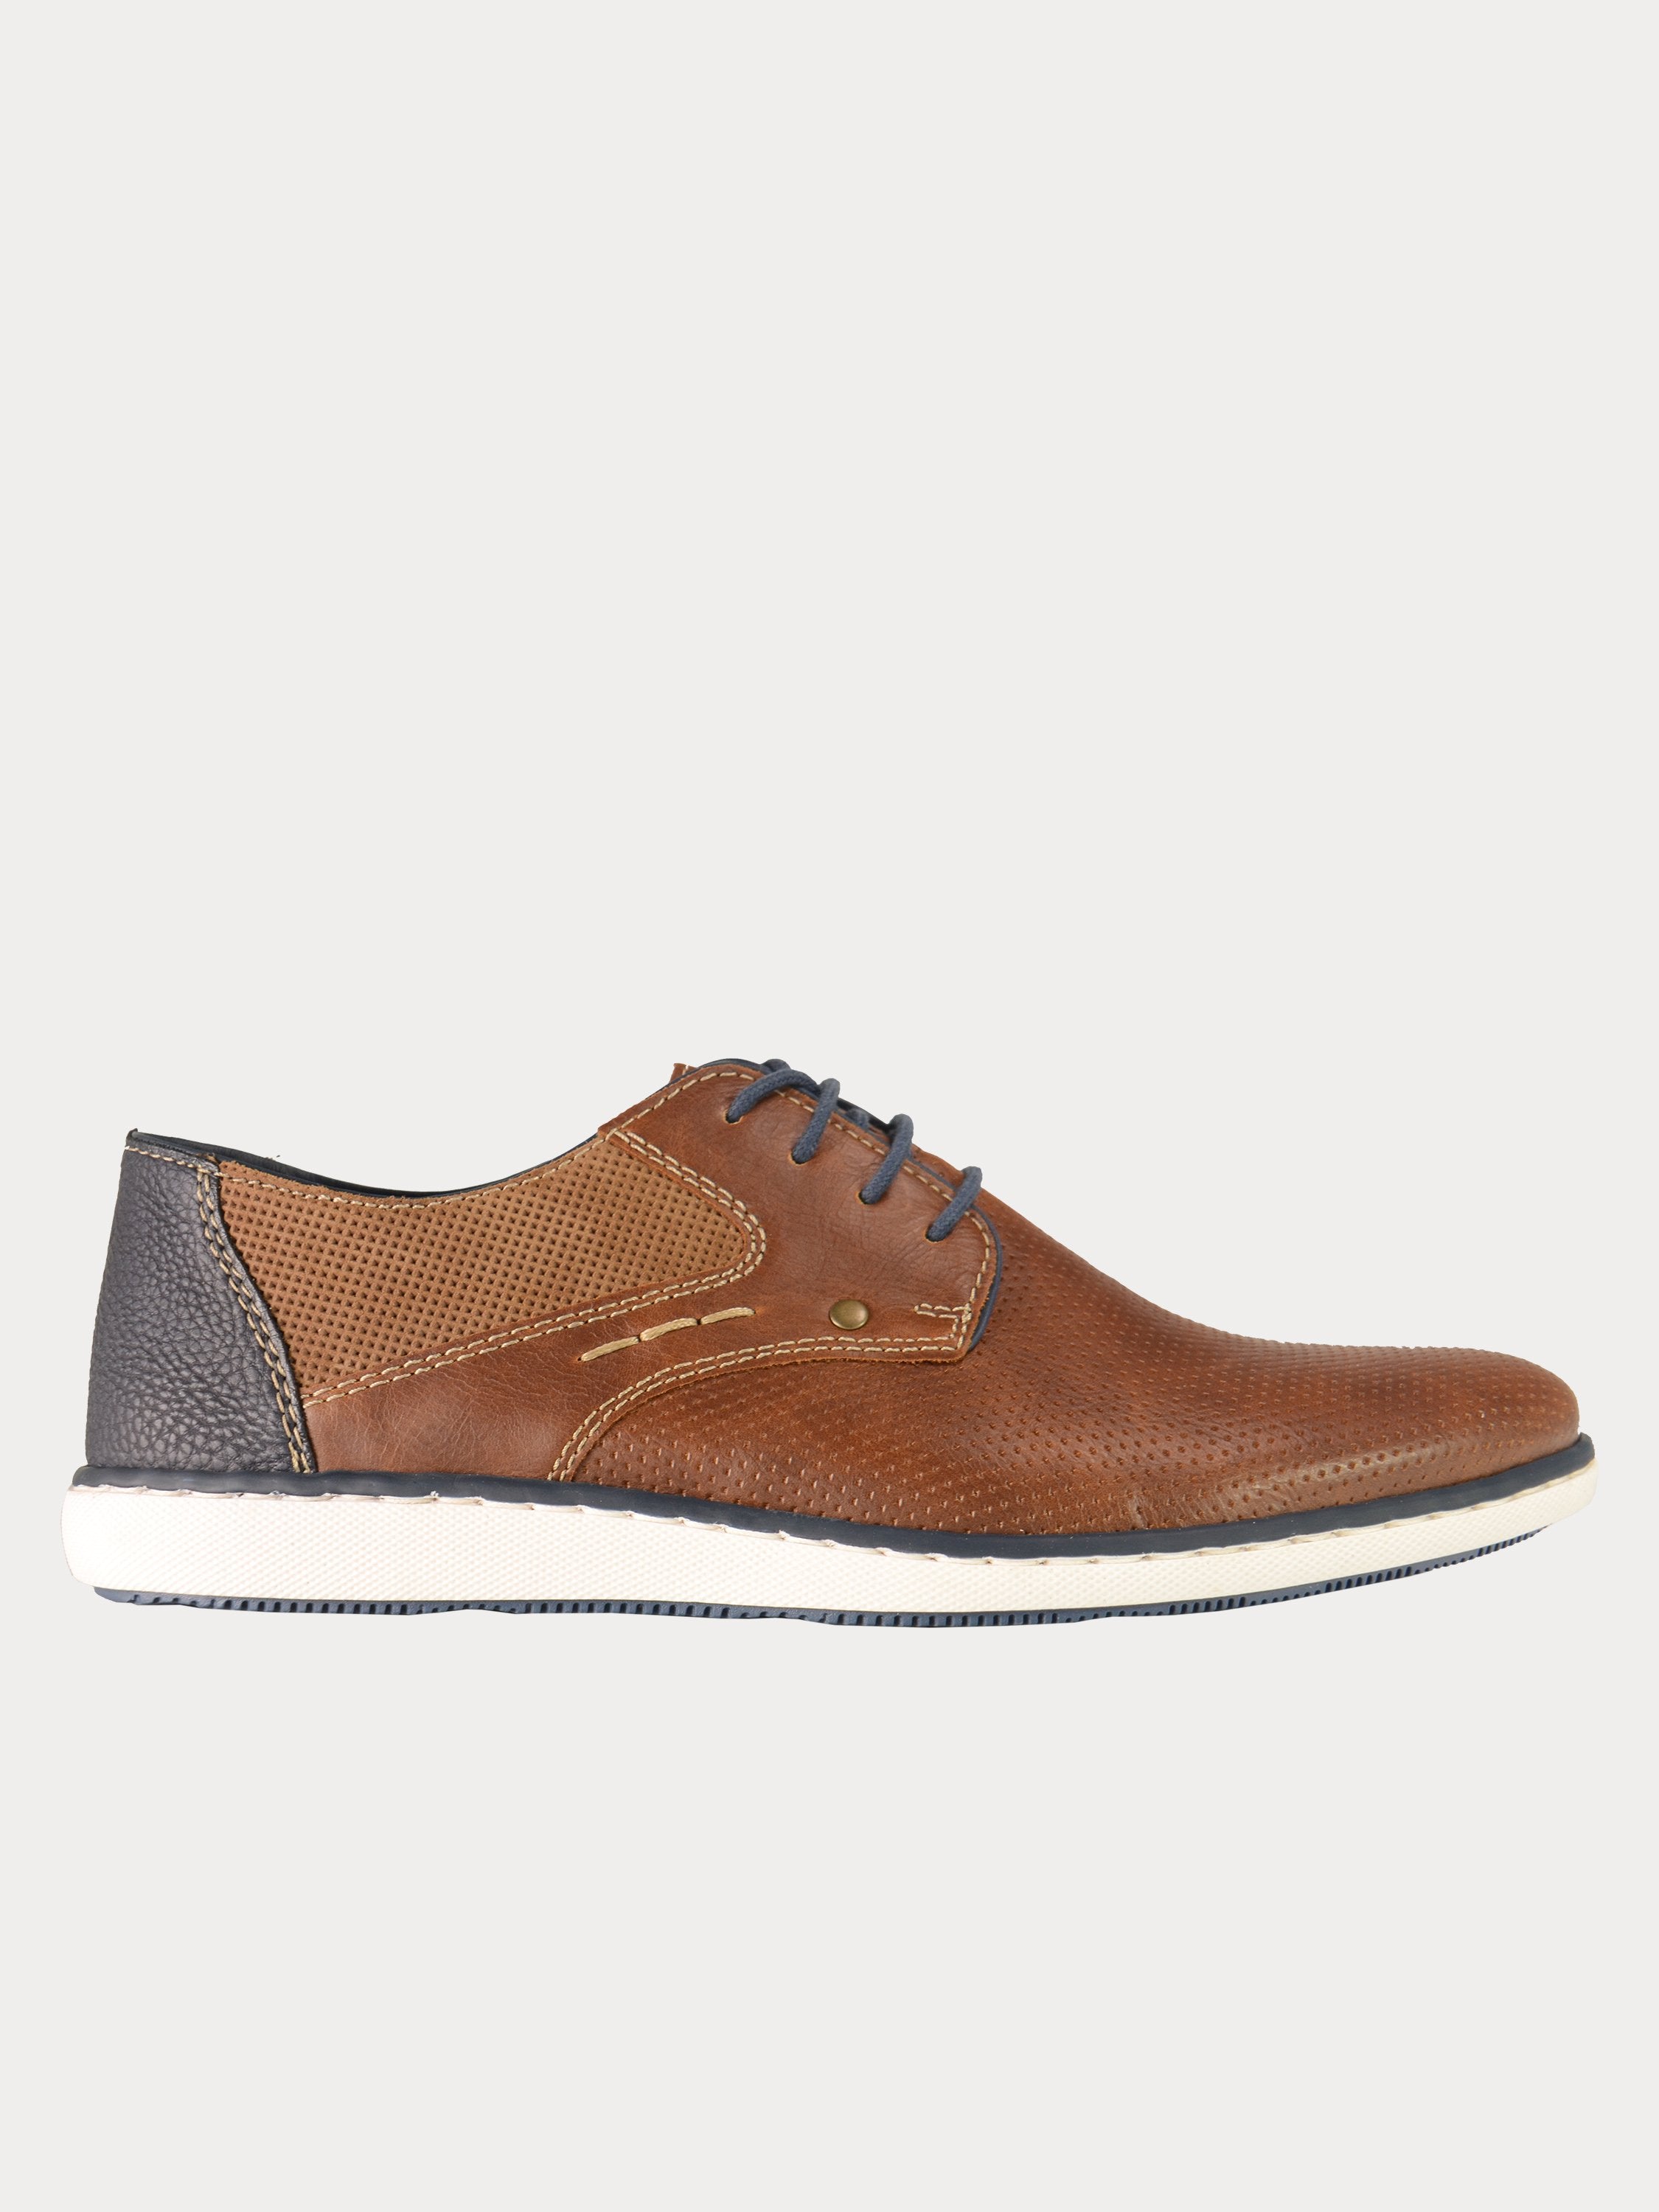 Rieker Men's Casual Lace Up Leather Shoes #color_Brown